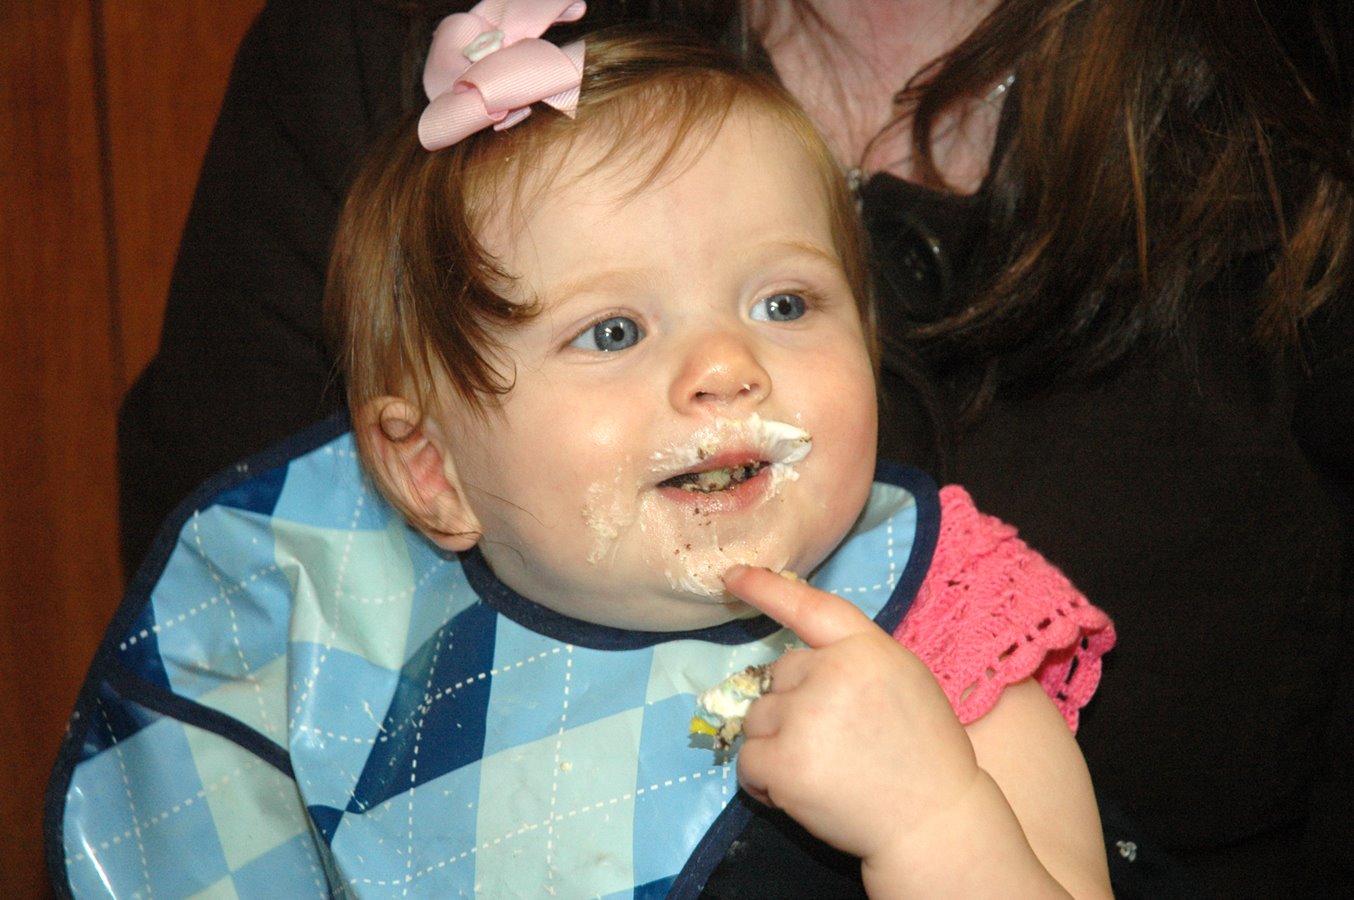 [Chloe+eating+cake.jpg]